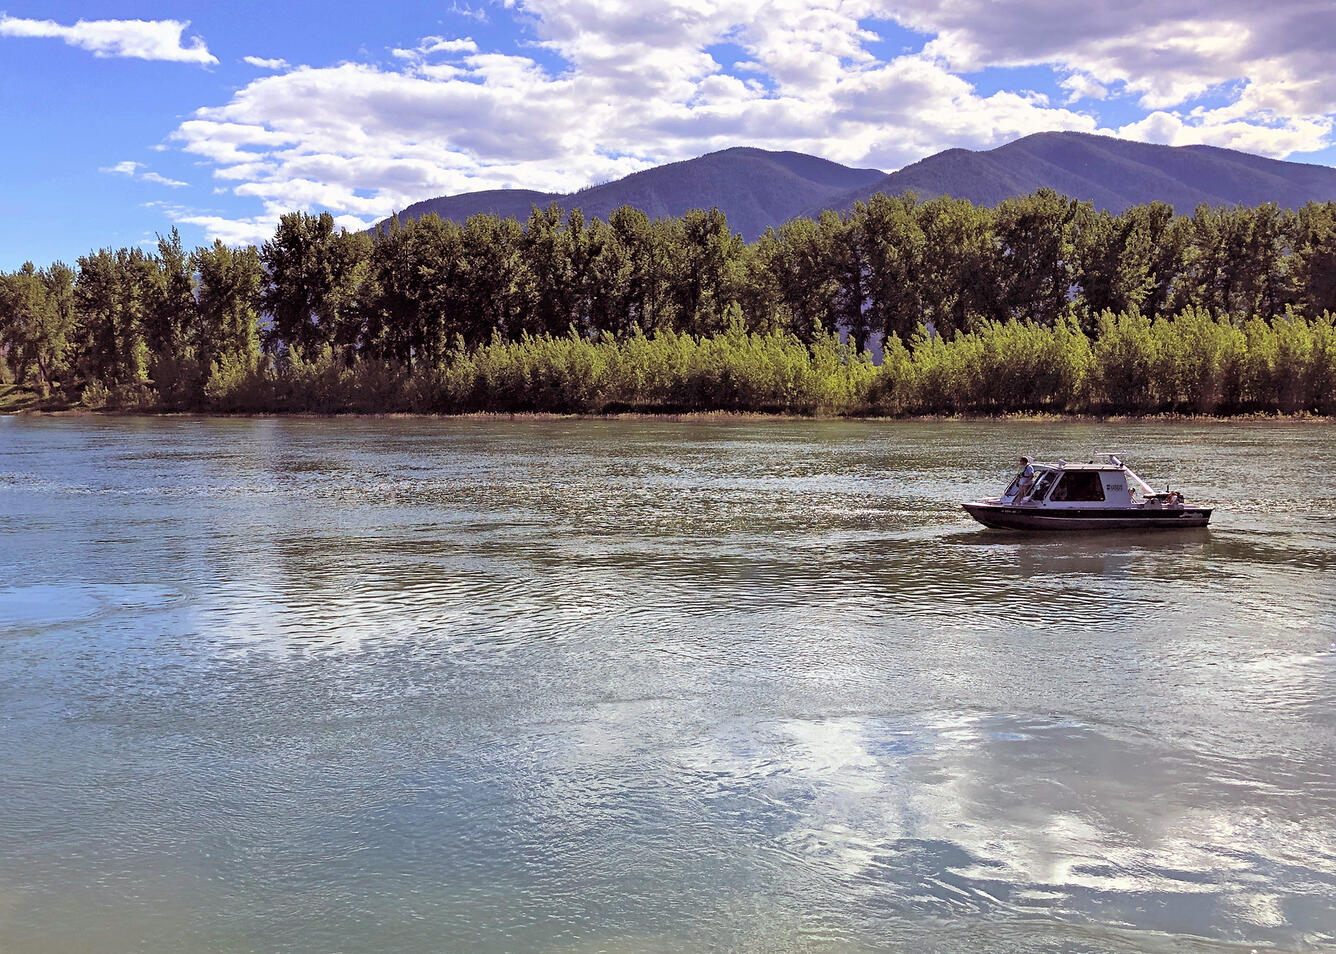 USGS research vessel on the Kootenai River, Idaho